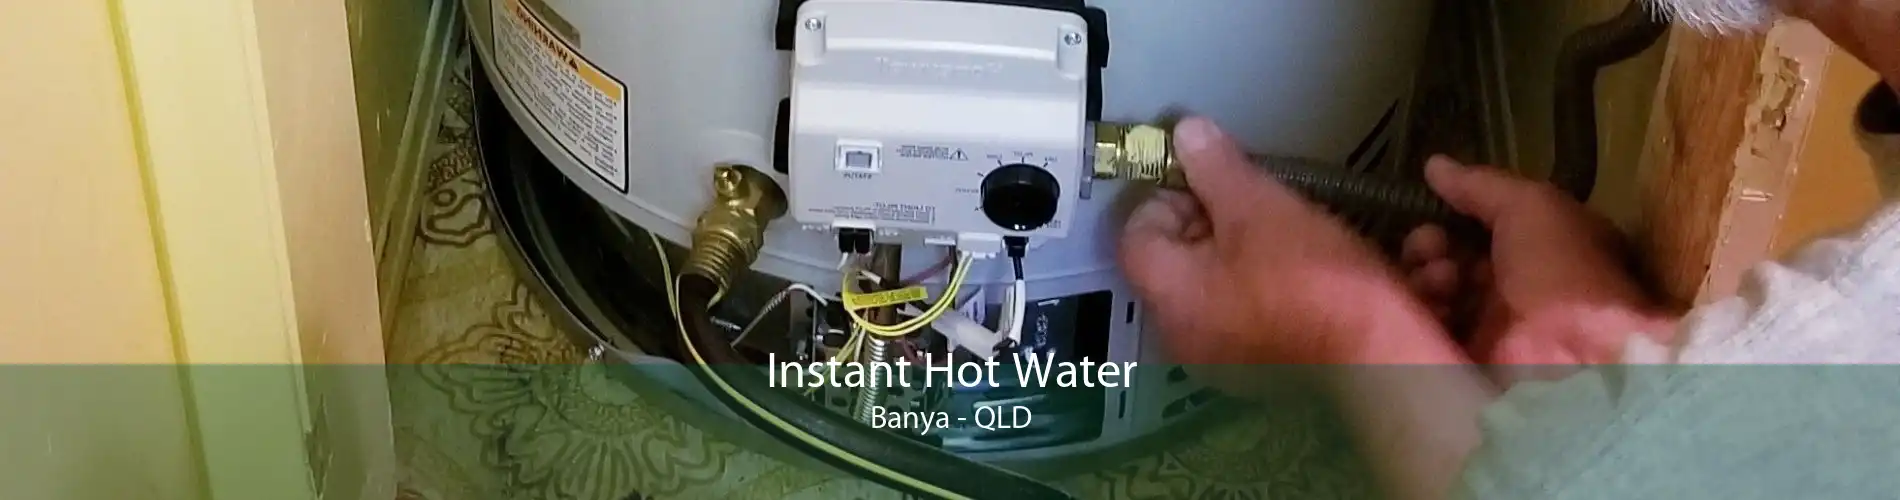 Instant Hot Water Banya - QLD